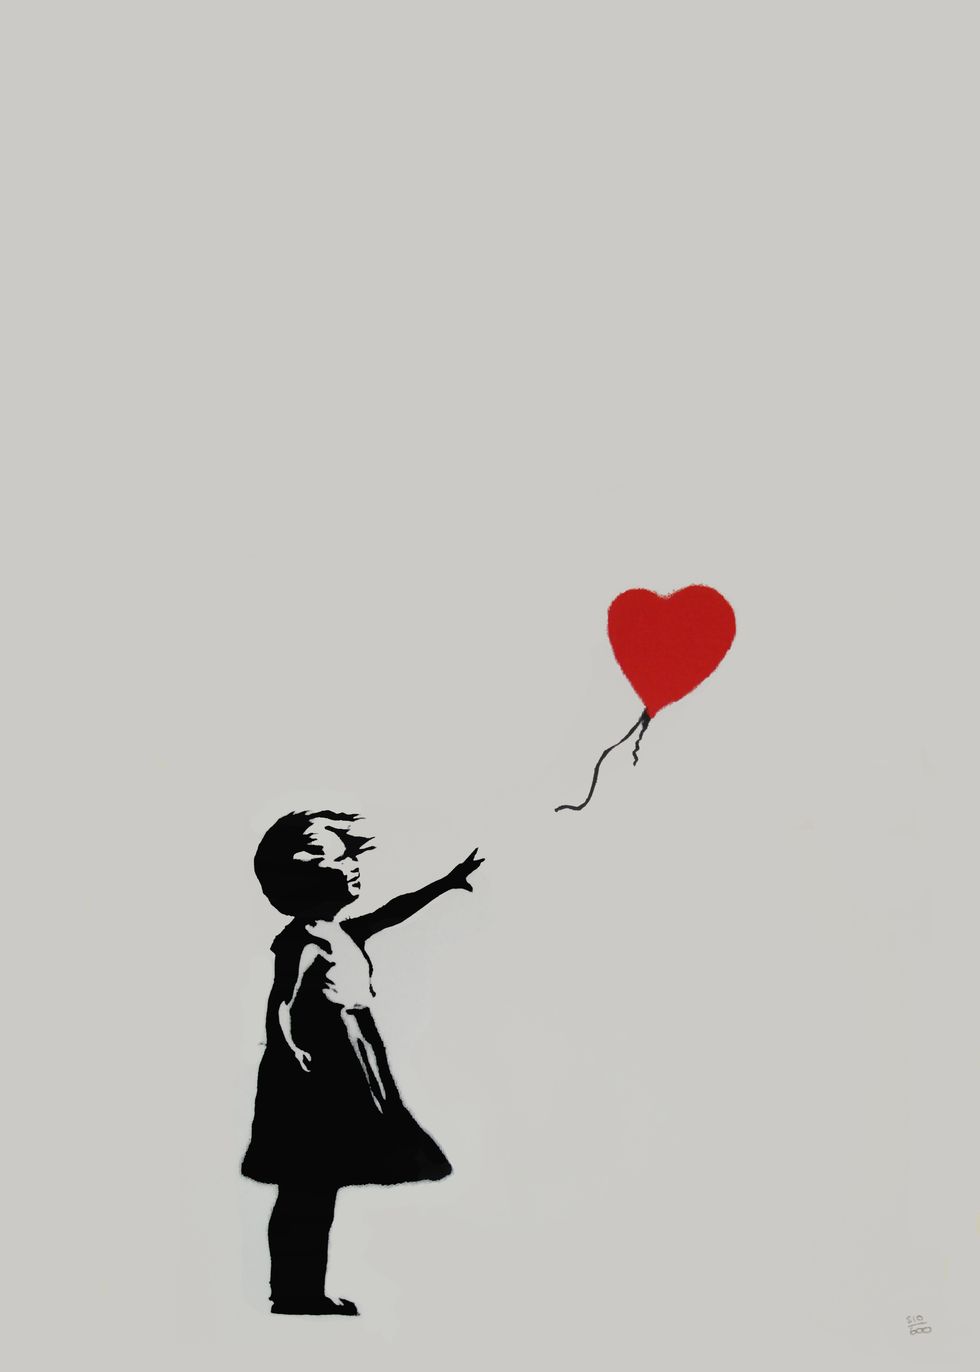 Red, Heart, Illustration, Love, Silhouette, Happy, Balloon, Smile, Valentine's day, Kite, 